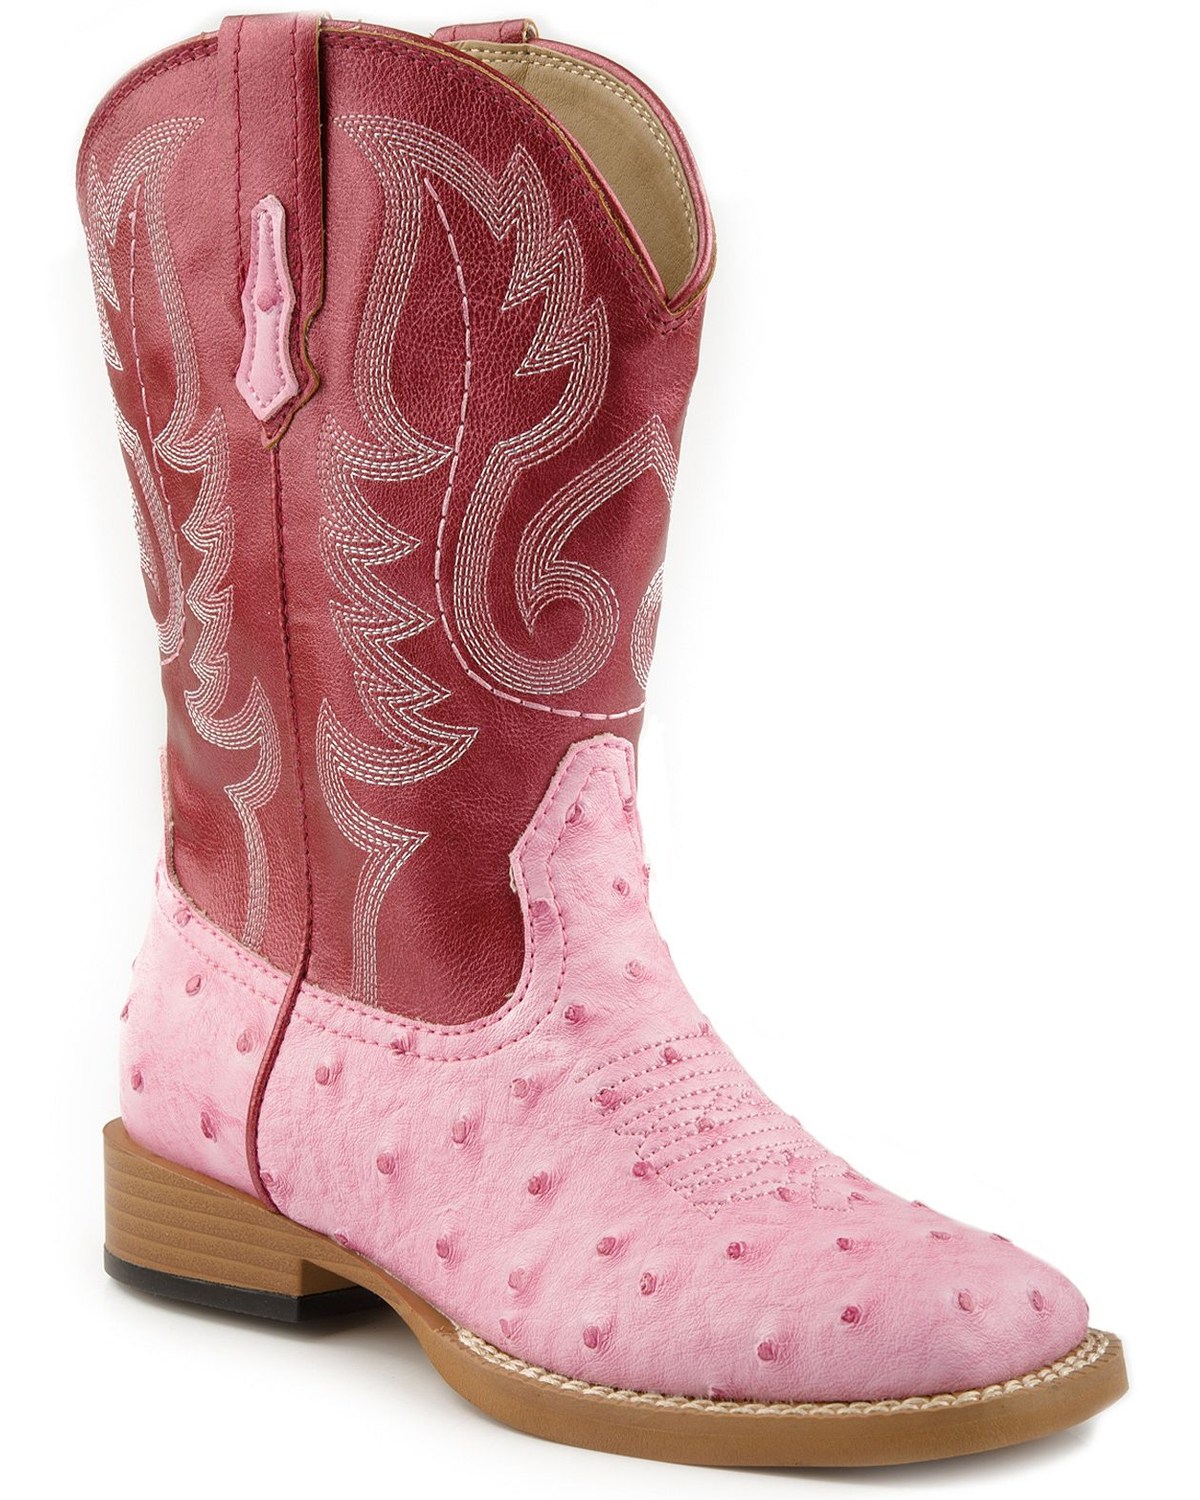 Roper Girls' Ostrich Print Western Boots - Square Toe